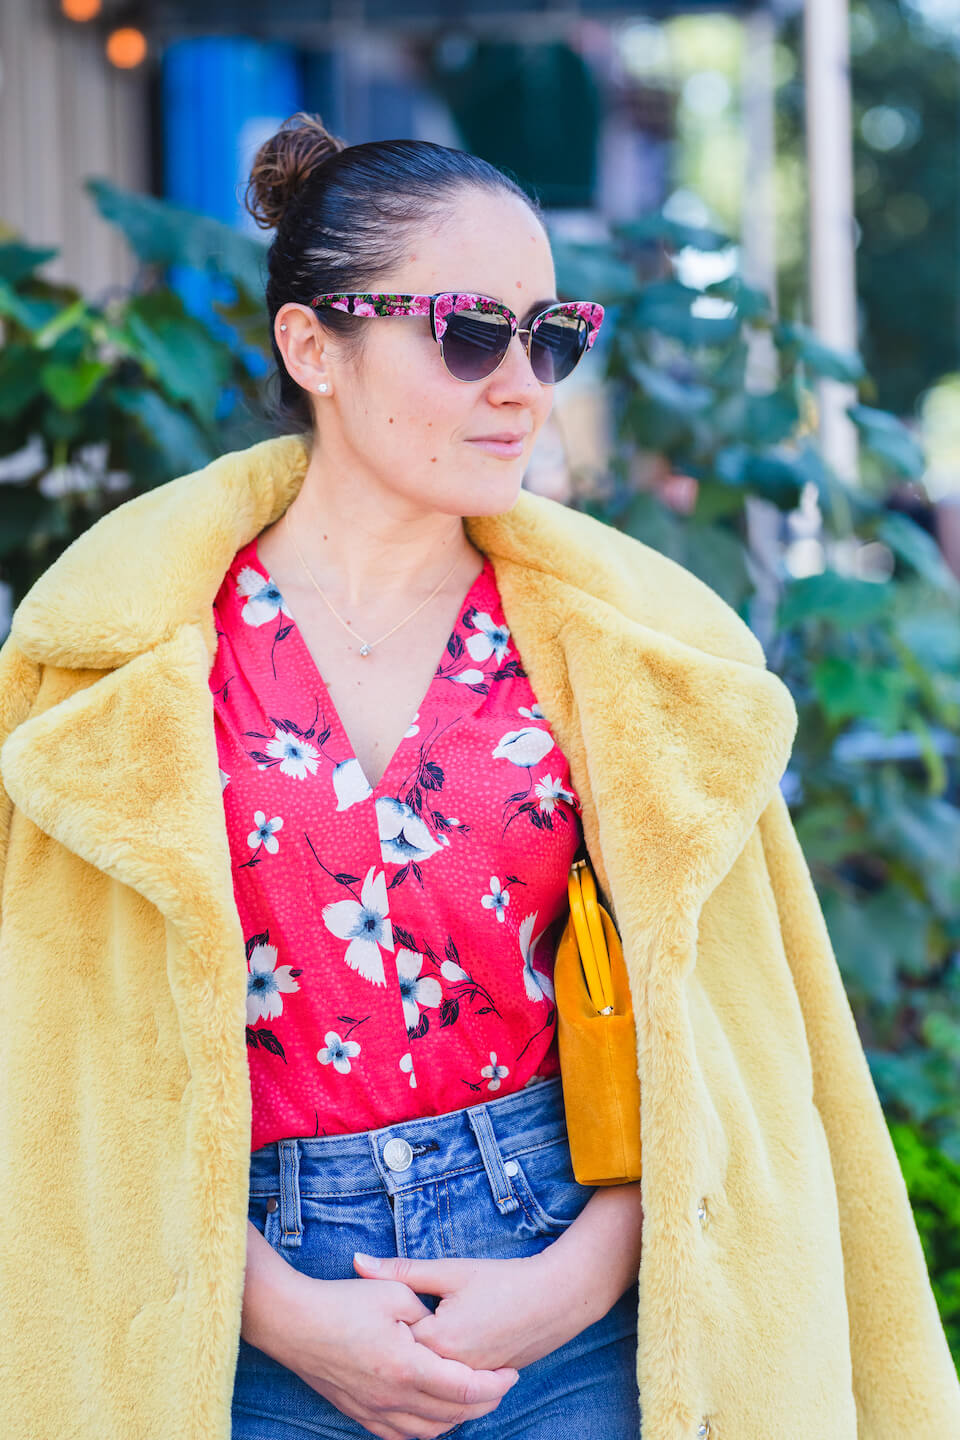 Rebecca Taylor Blouse Yellow Faux Fur Coat Rag & Bone Jeans Look by Modnitsa Styling